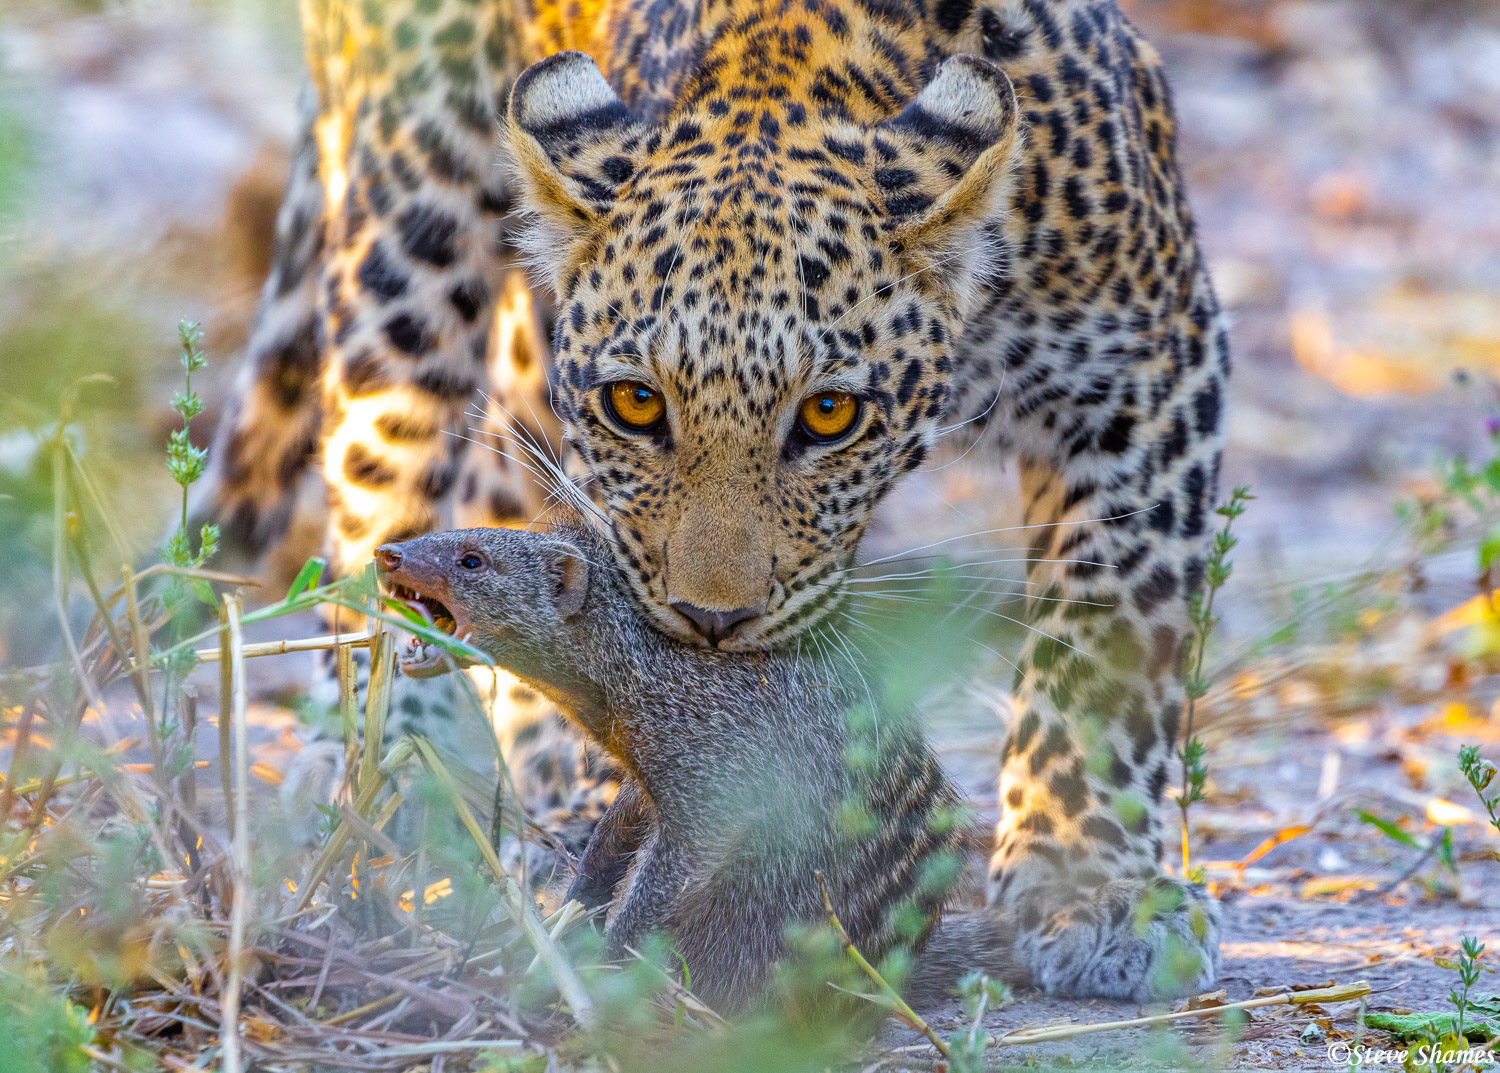 This half grown leopard cub scored a mongoose kill.